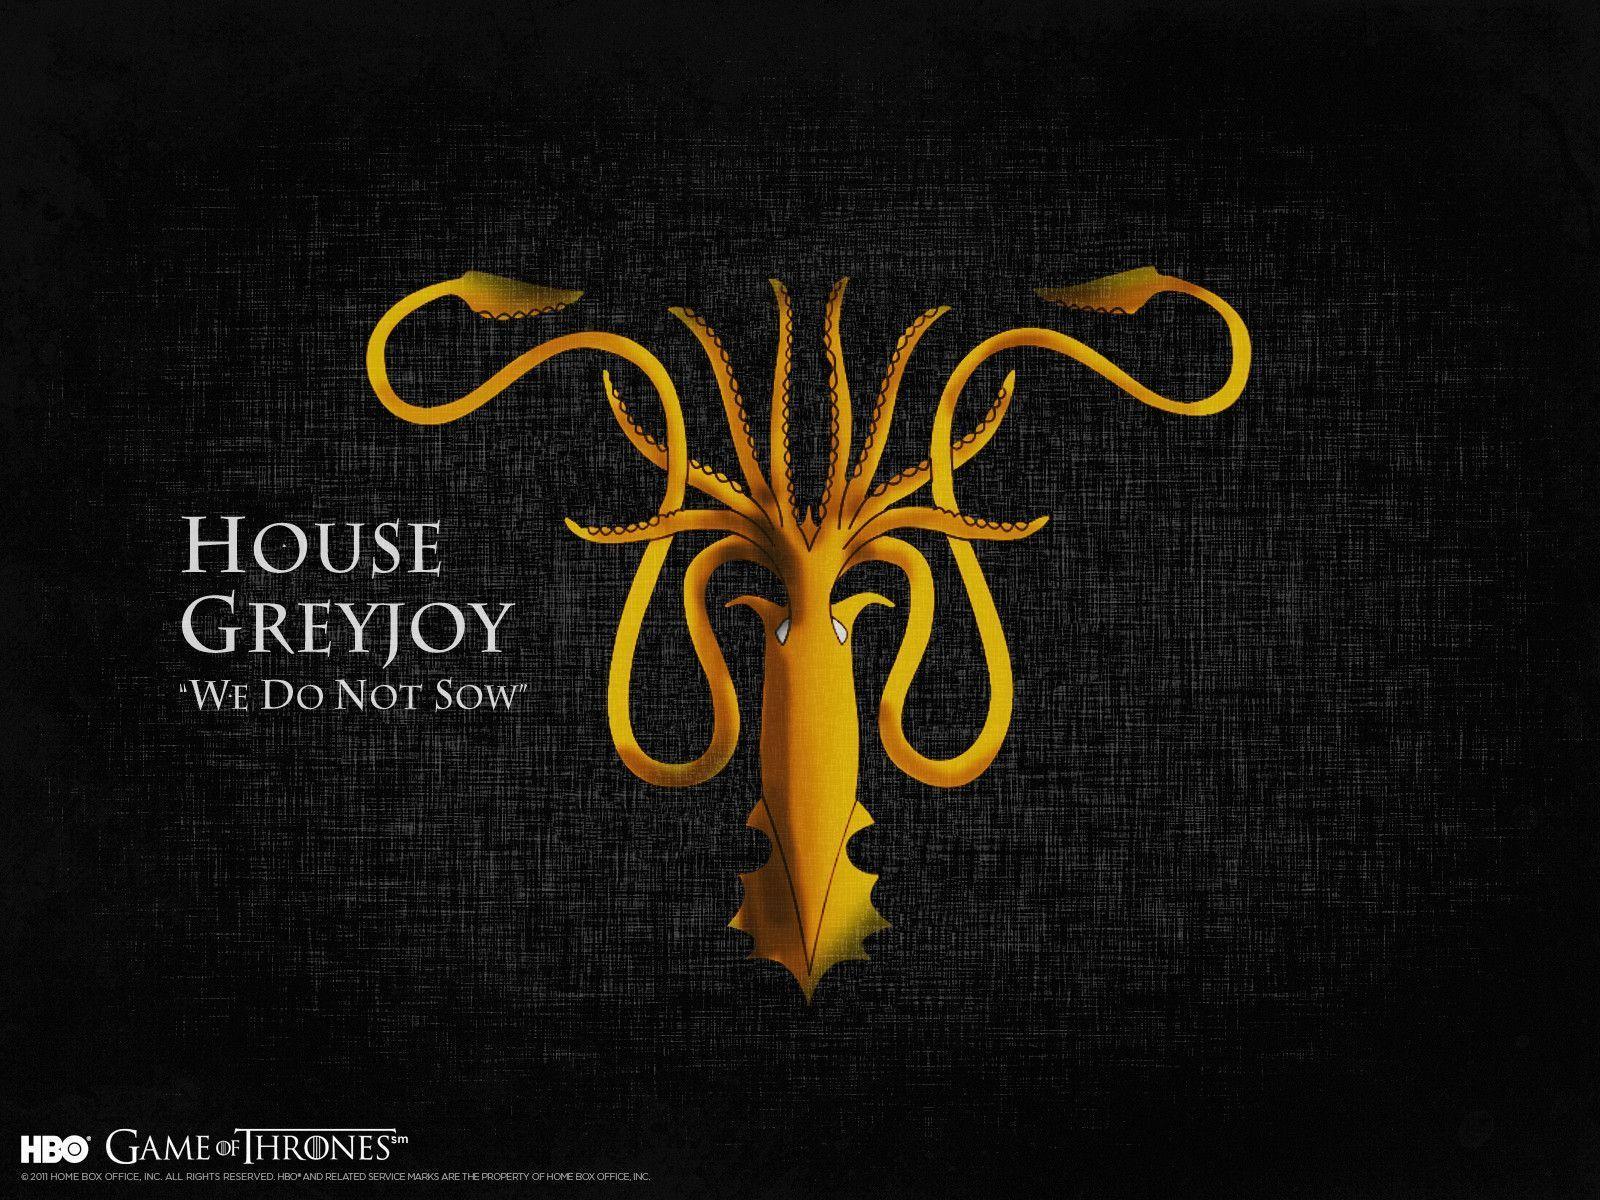 House Greyjoy of Thrones Wallpaper